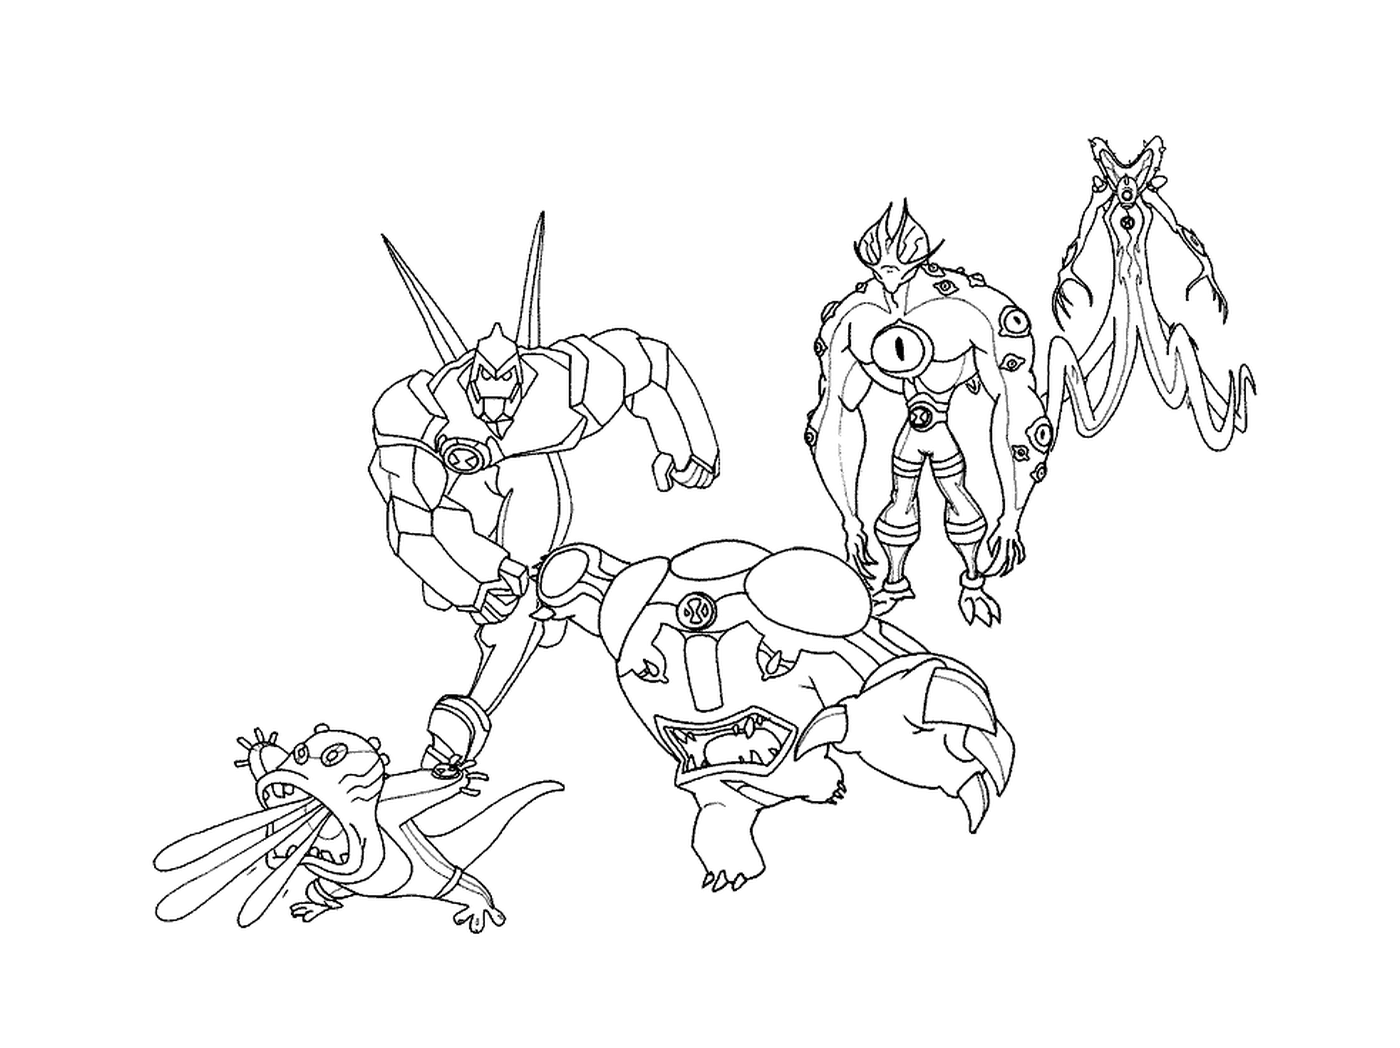  Varios personajes de dibujos animados dibujados 